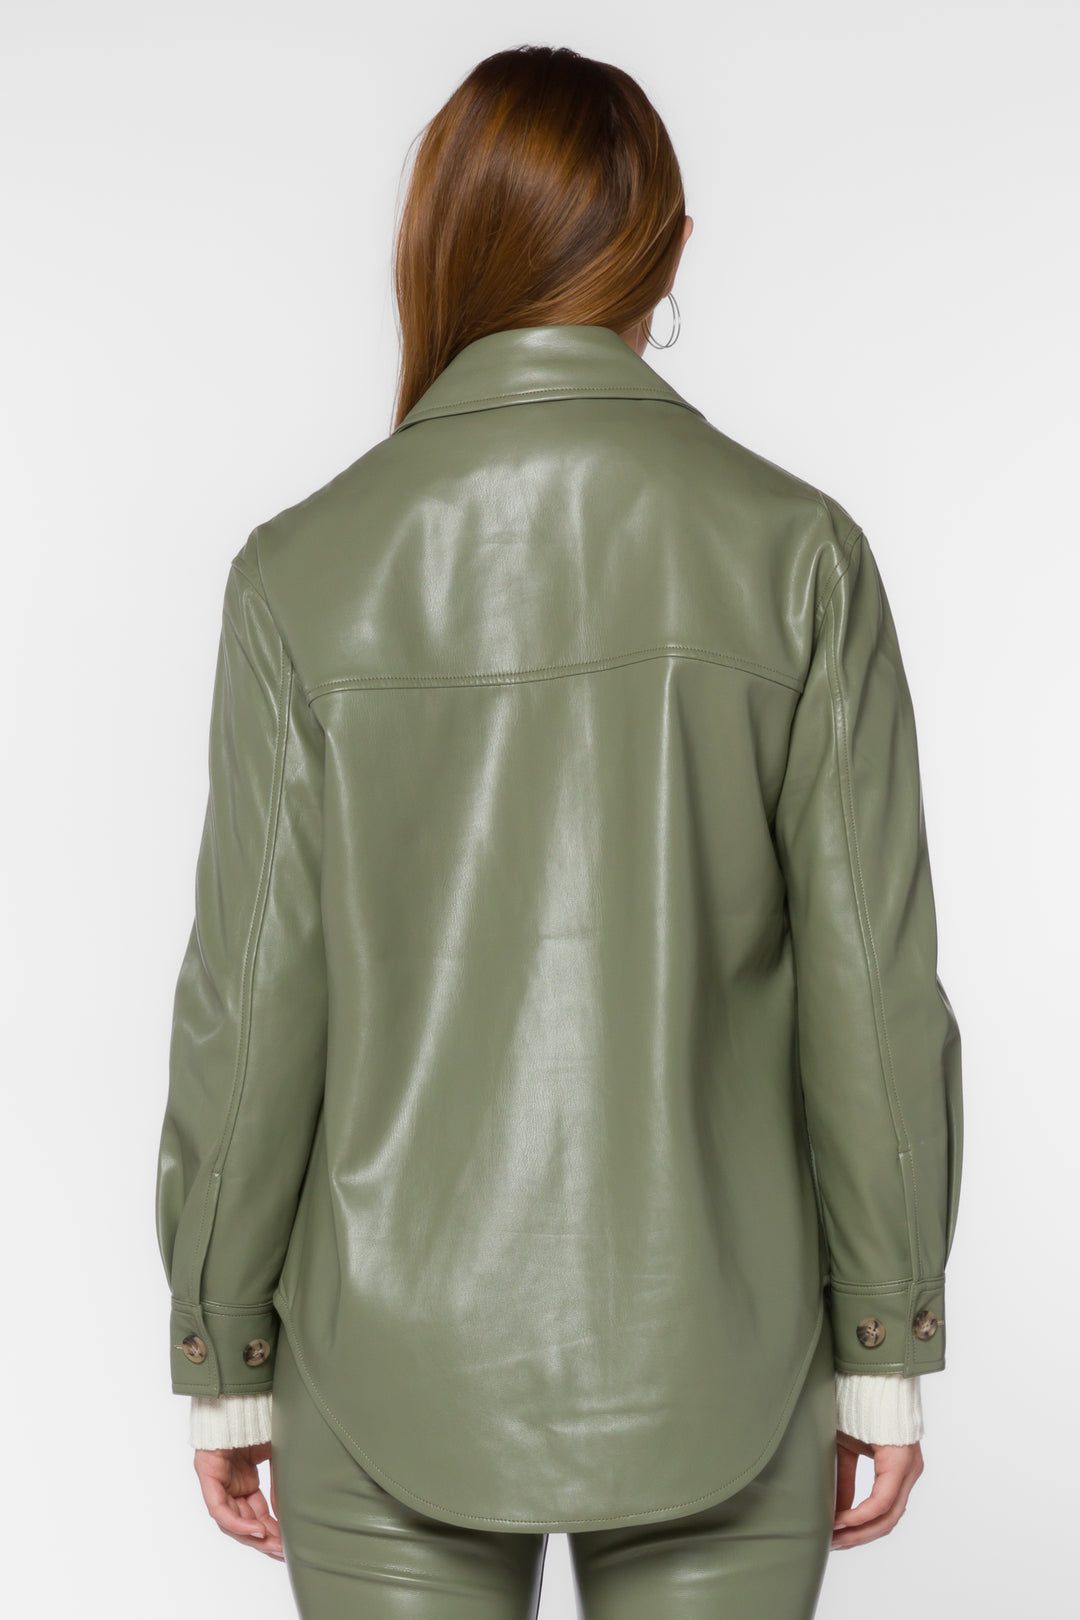 Eleanor Dry Sage Jacket - Jackets & Outerwear - Velvet Heart Clothing